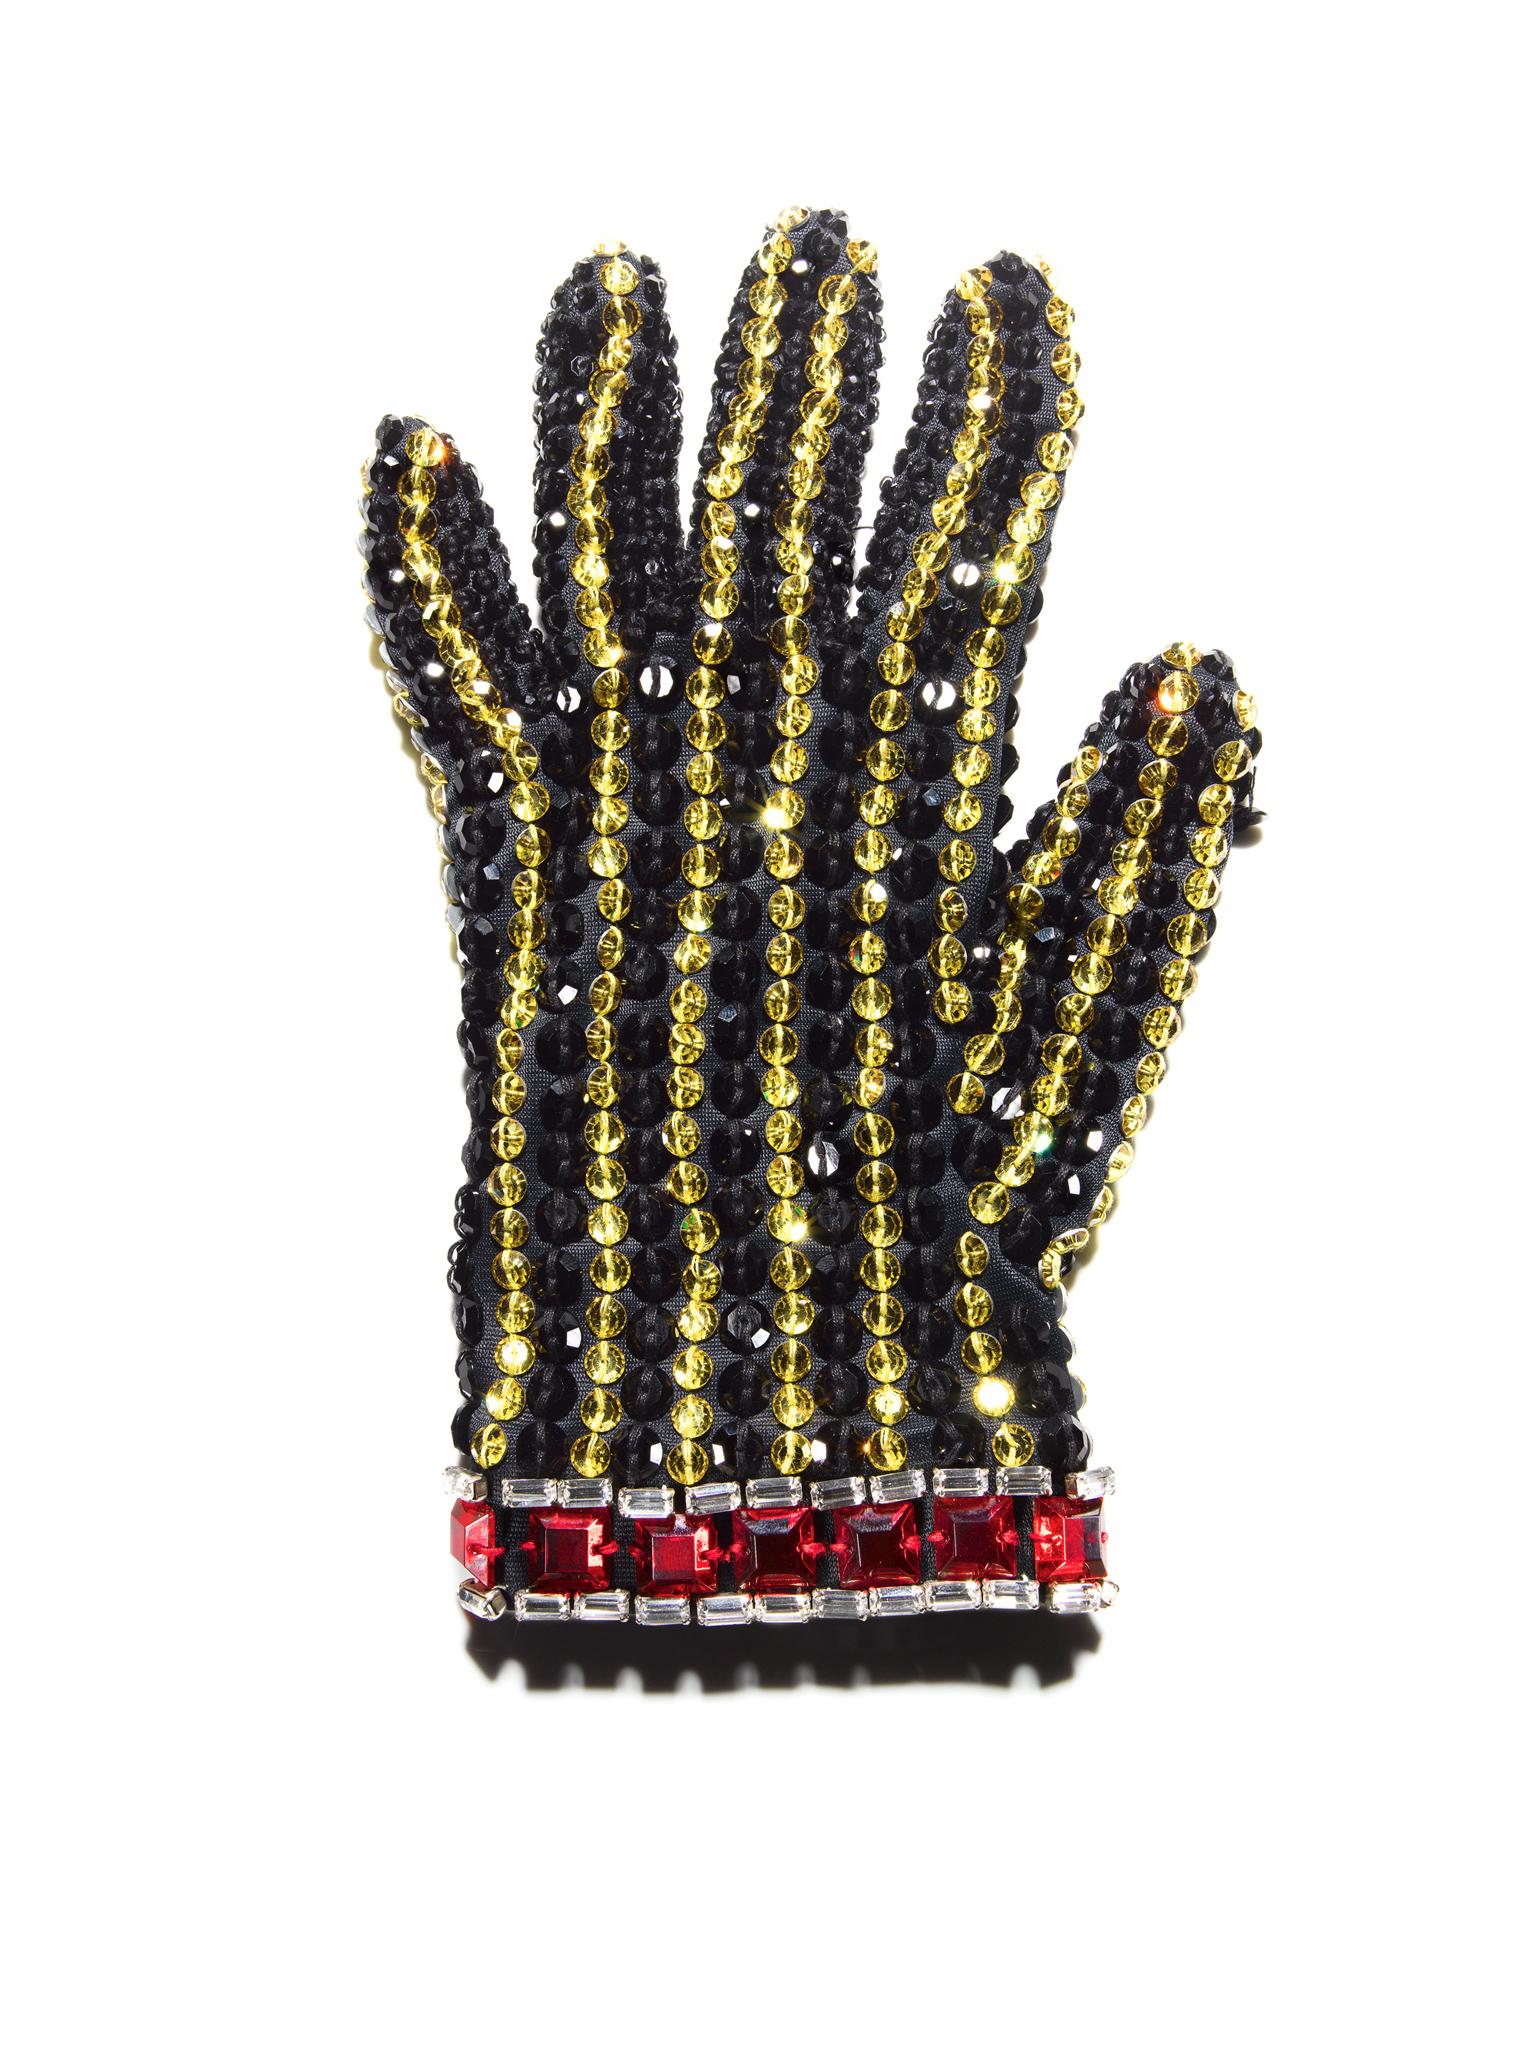 Black Glove ( Michael Jackson )  - large format still life of iconic glove